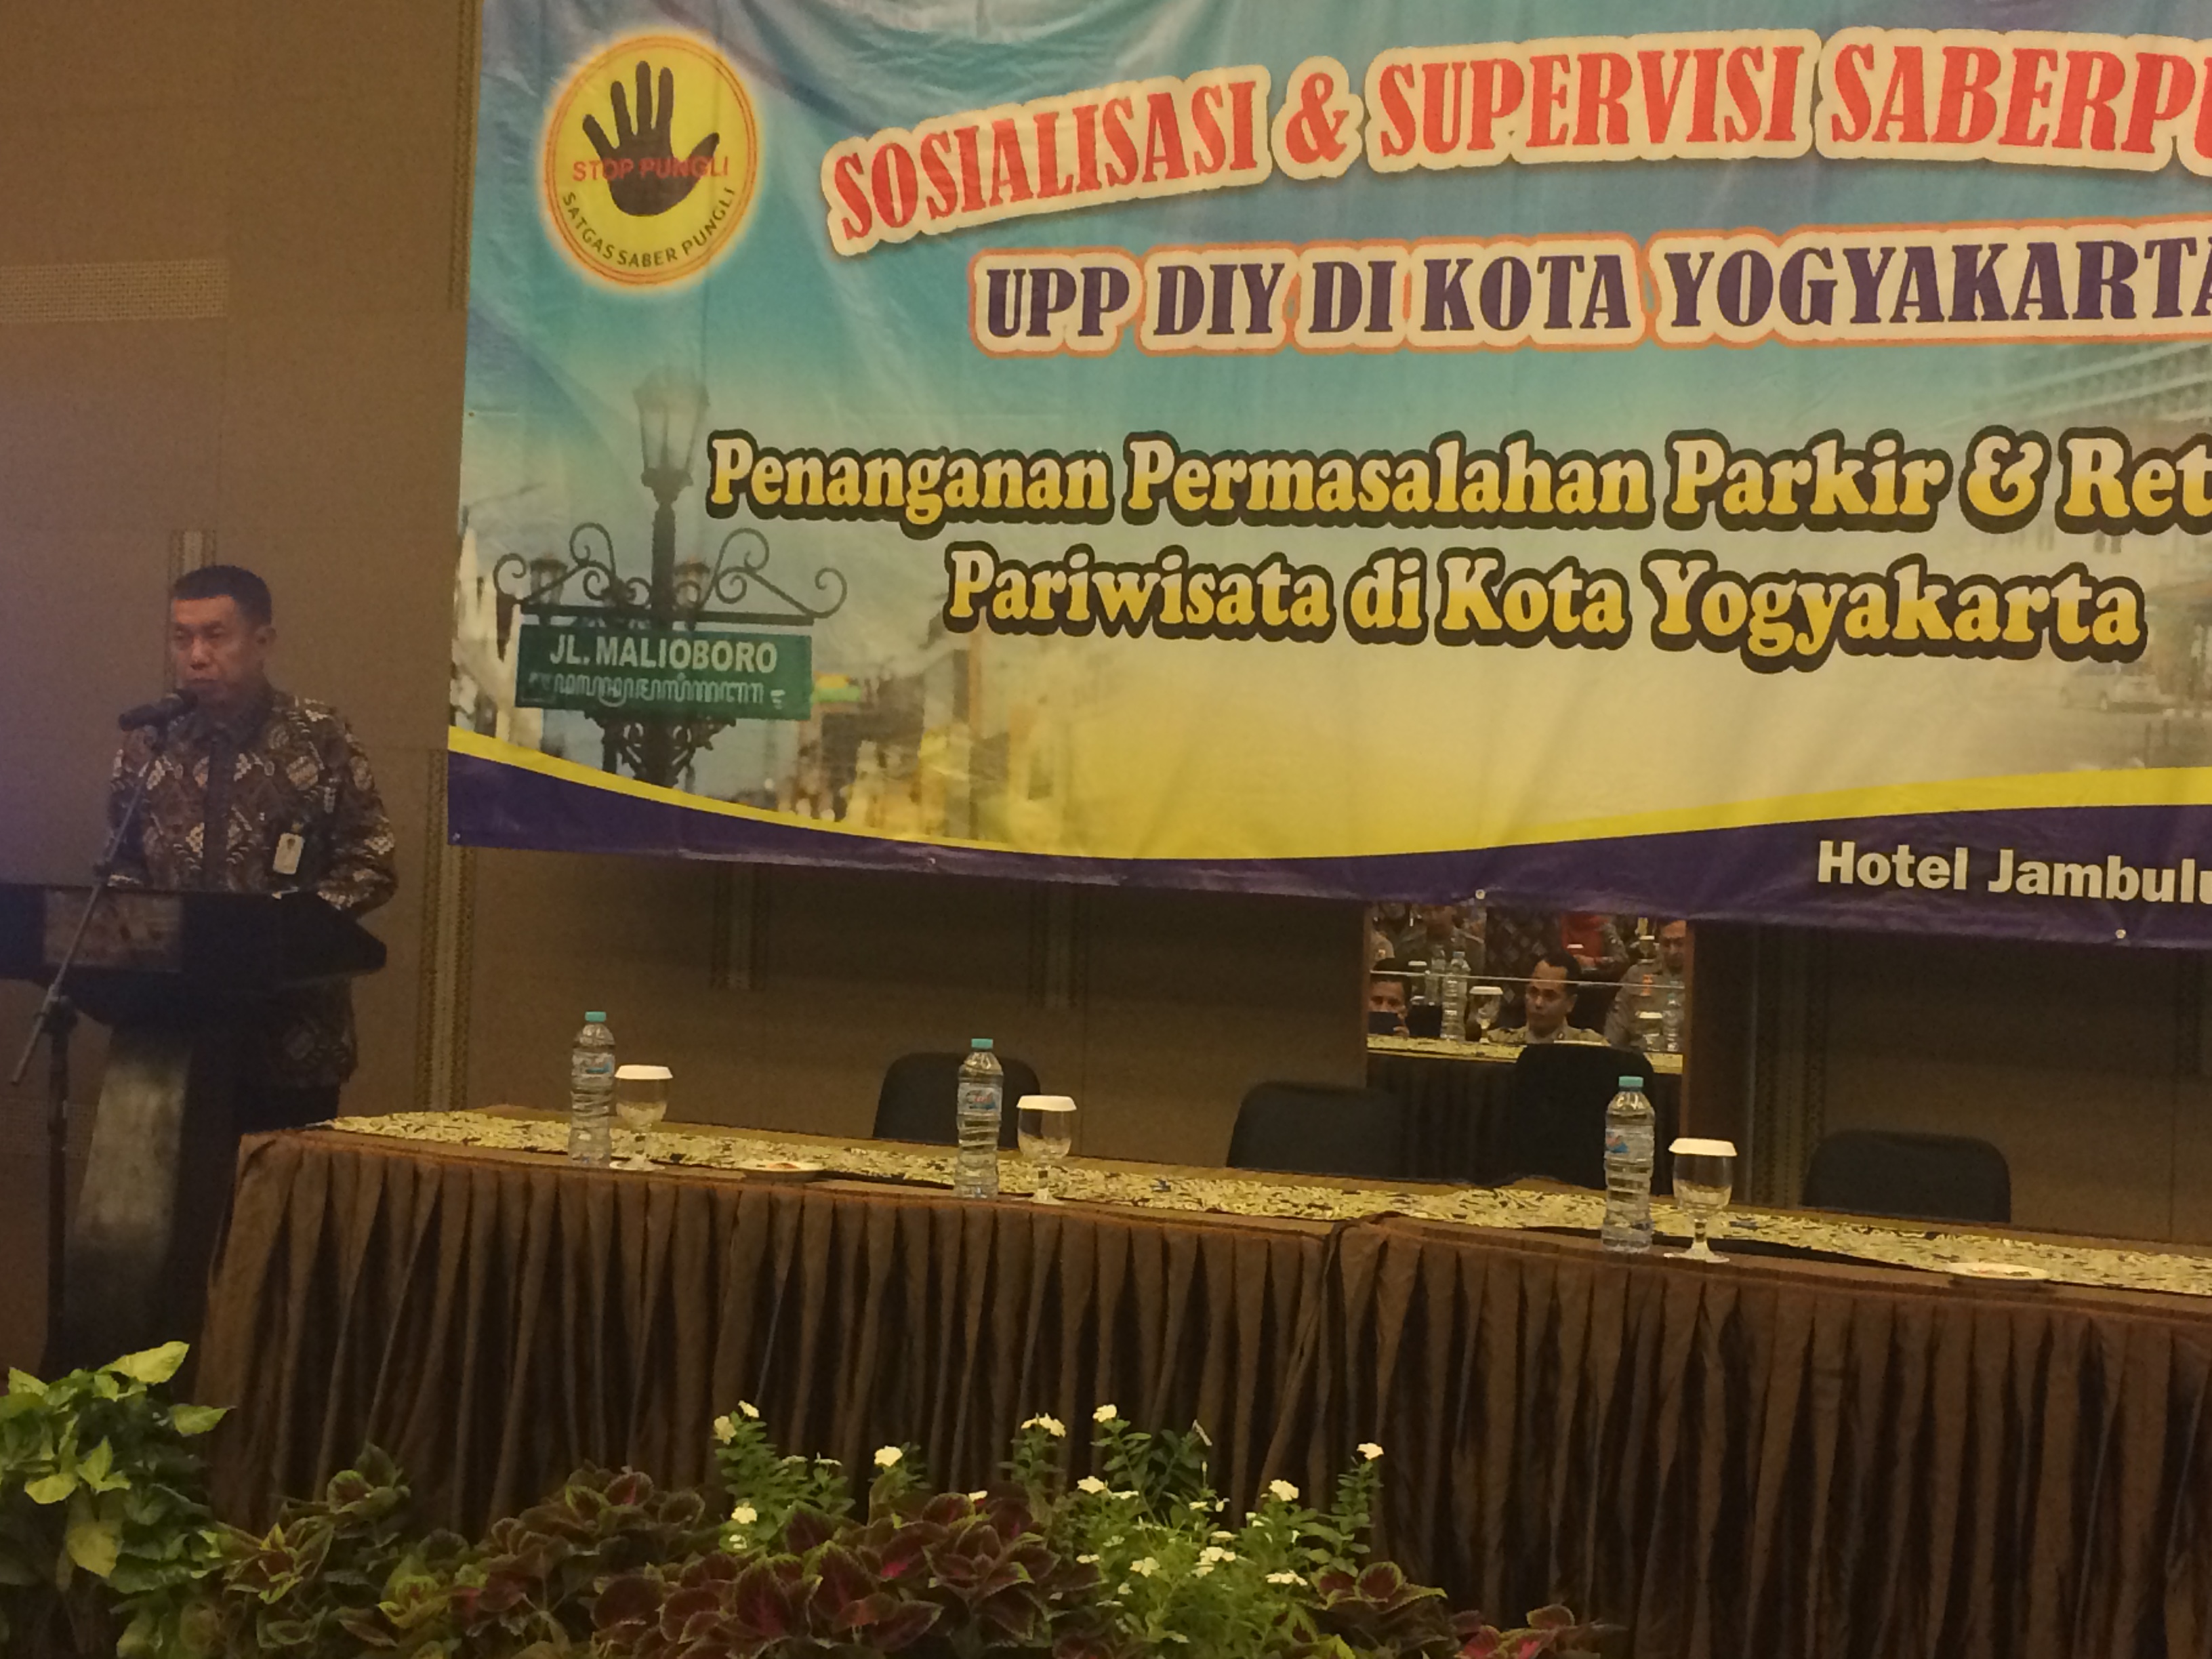 Sosialisasi & Supervisi Saberpungli Di Kota Yogyakarta